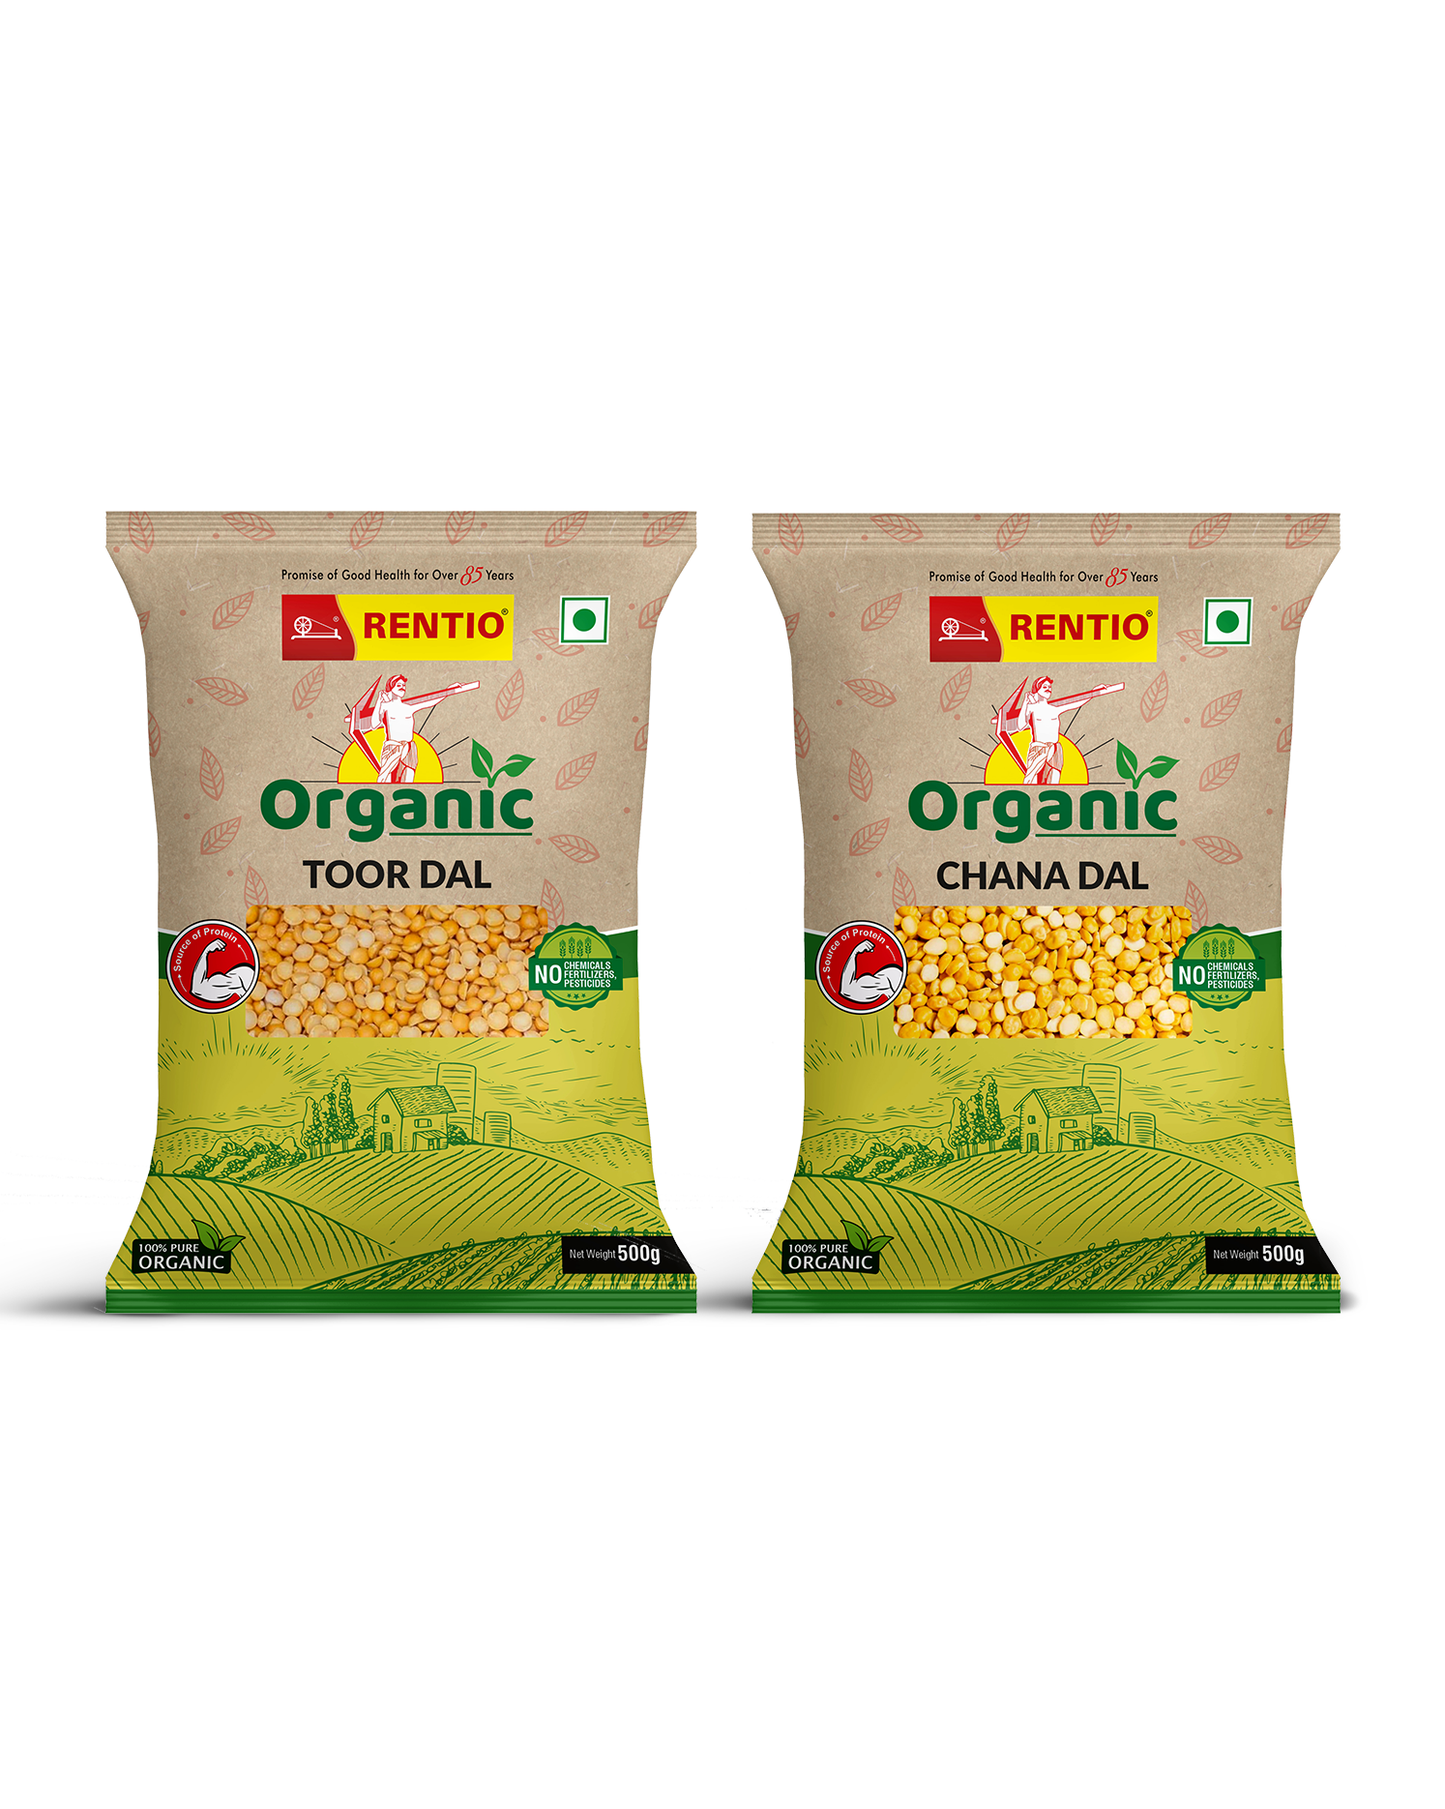 RENTIO Organic Chana dal (500 g) + Organic Toor dal (500 g) Combo